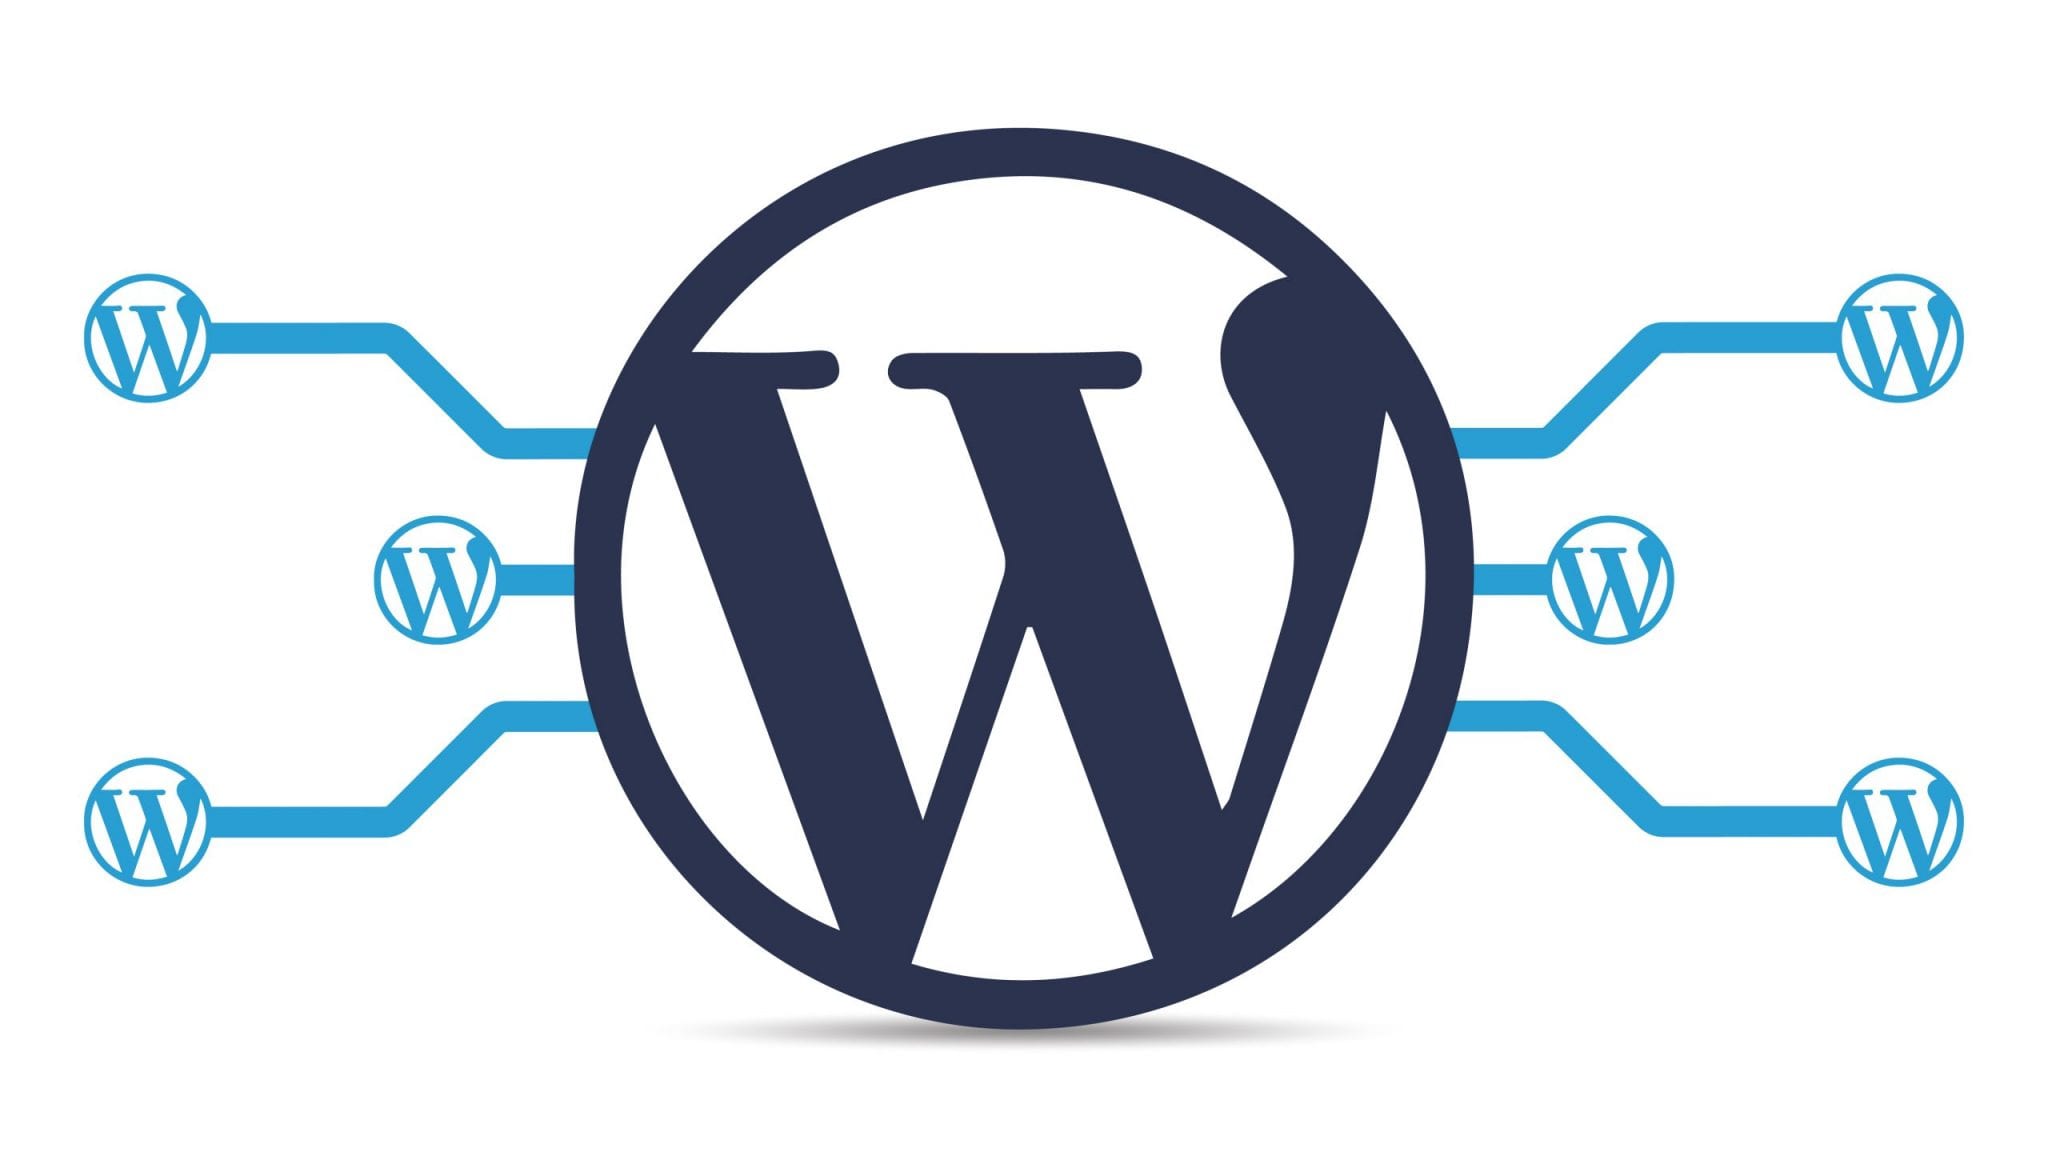 A WordPress logo graphic demonstrating WordPress multisite hosting